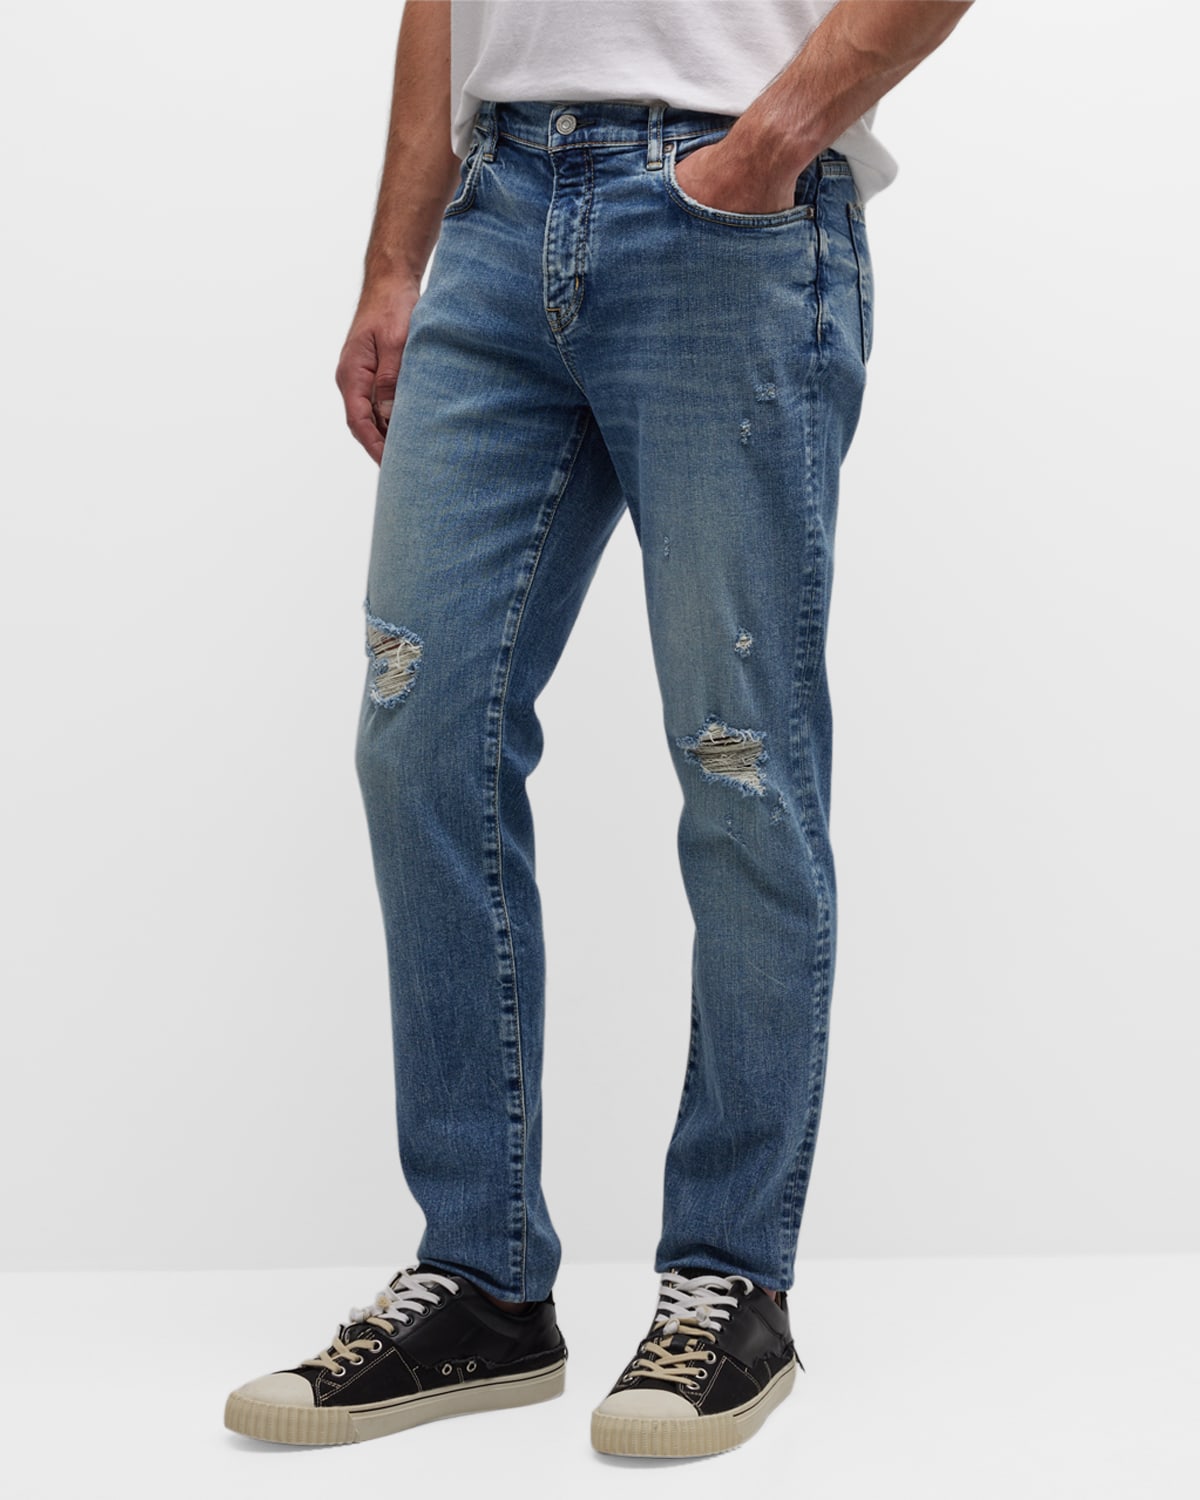 Men's Larkinville Distressed Jeans